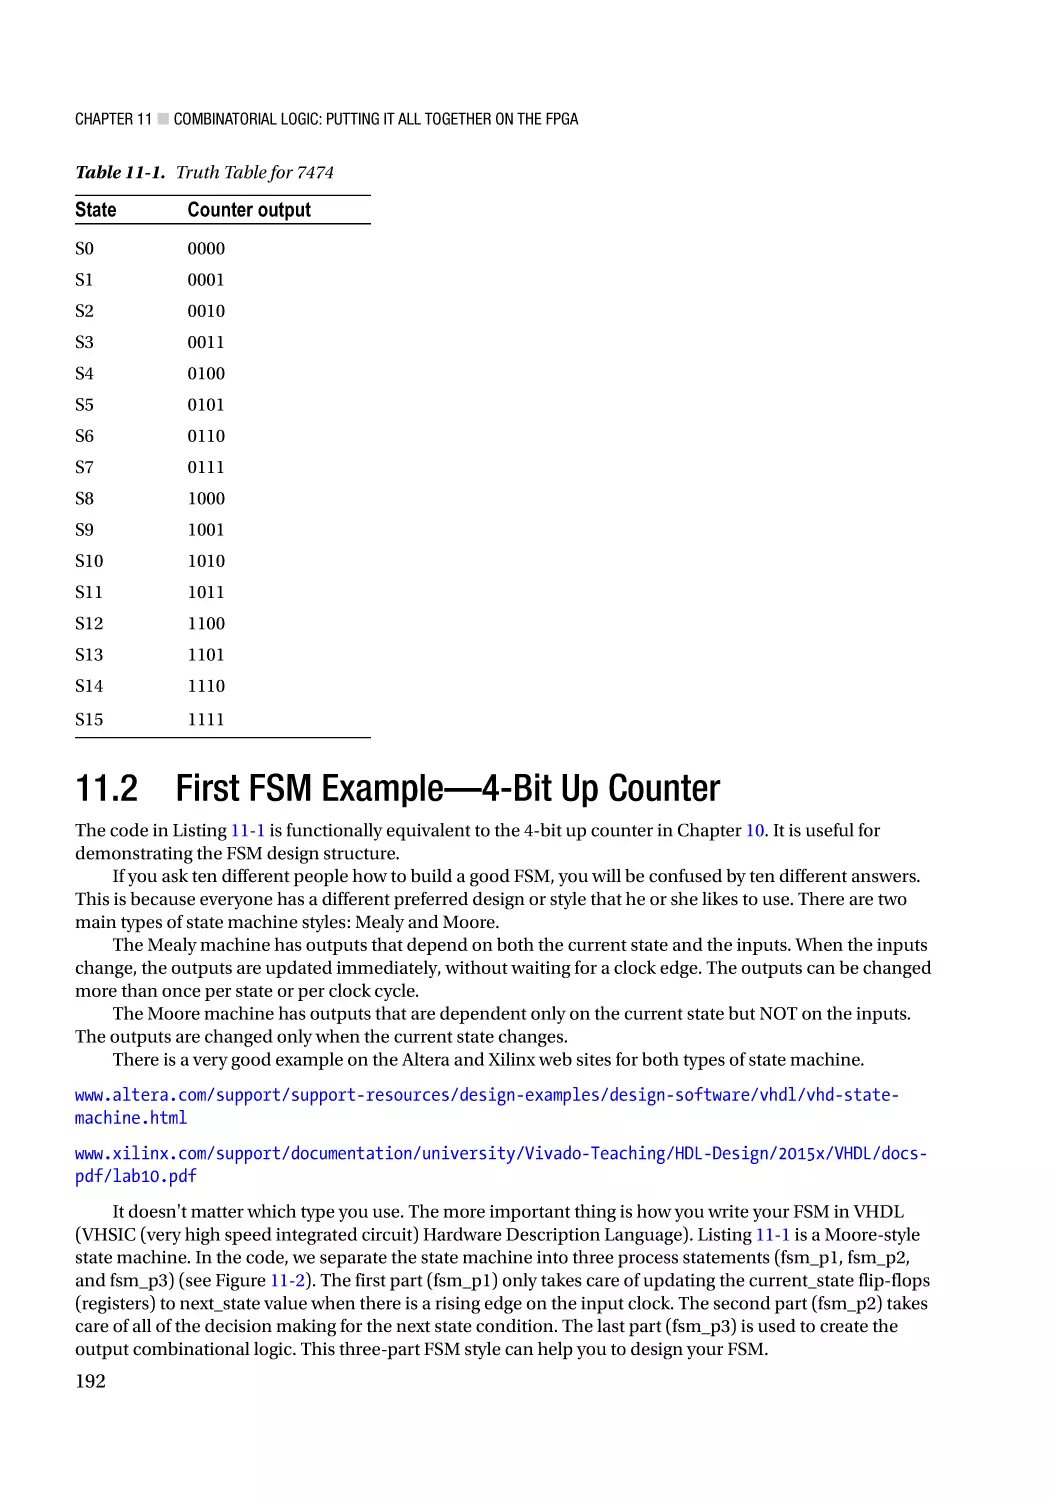 11.2 First FSM Example—4-Bit Up Counter